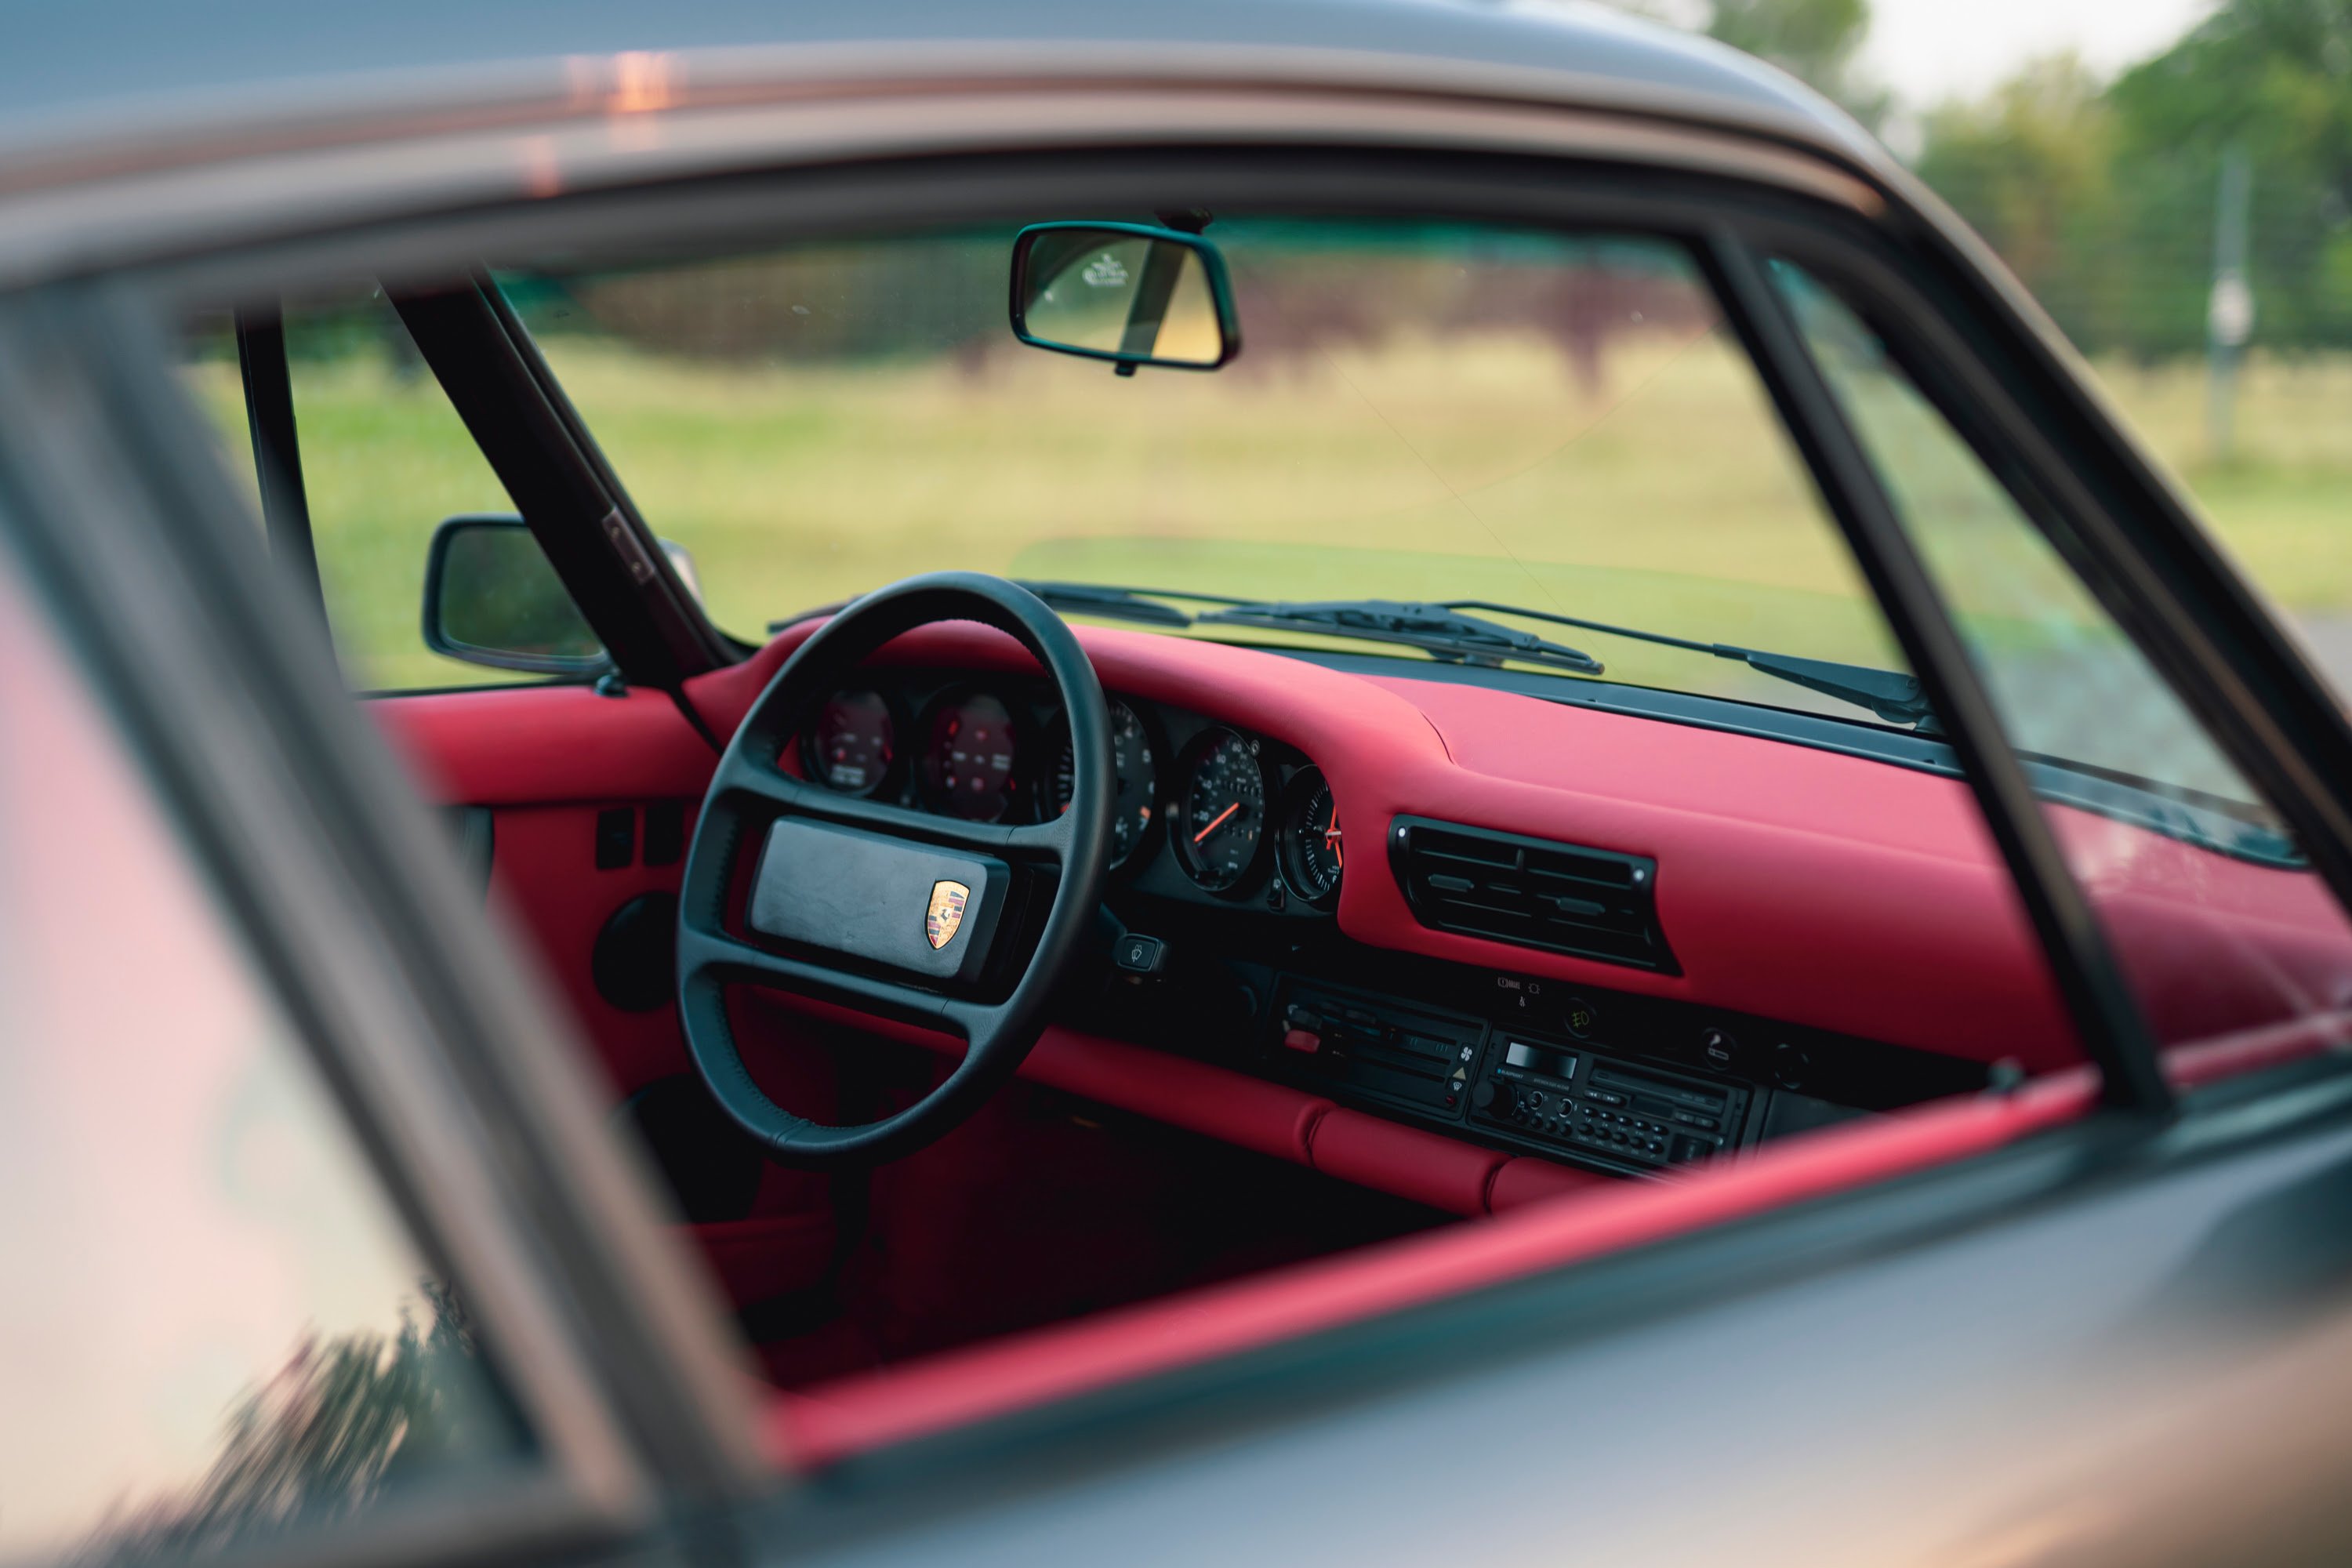 930 Turbo Flachbau with Lipstick Red interior.